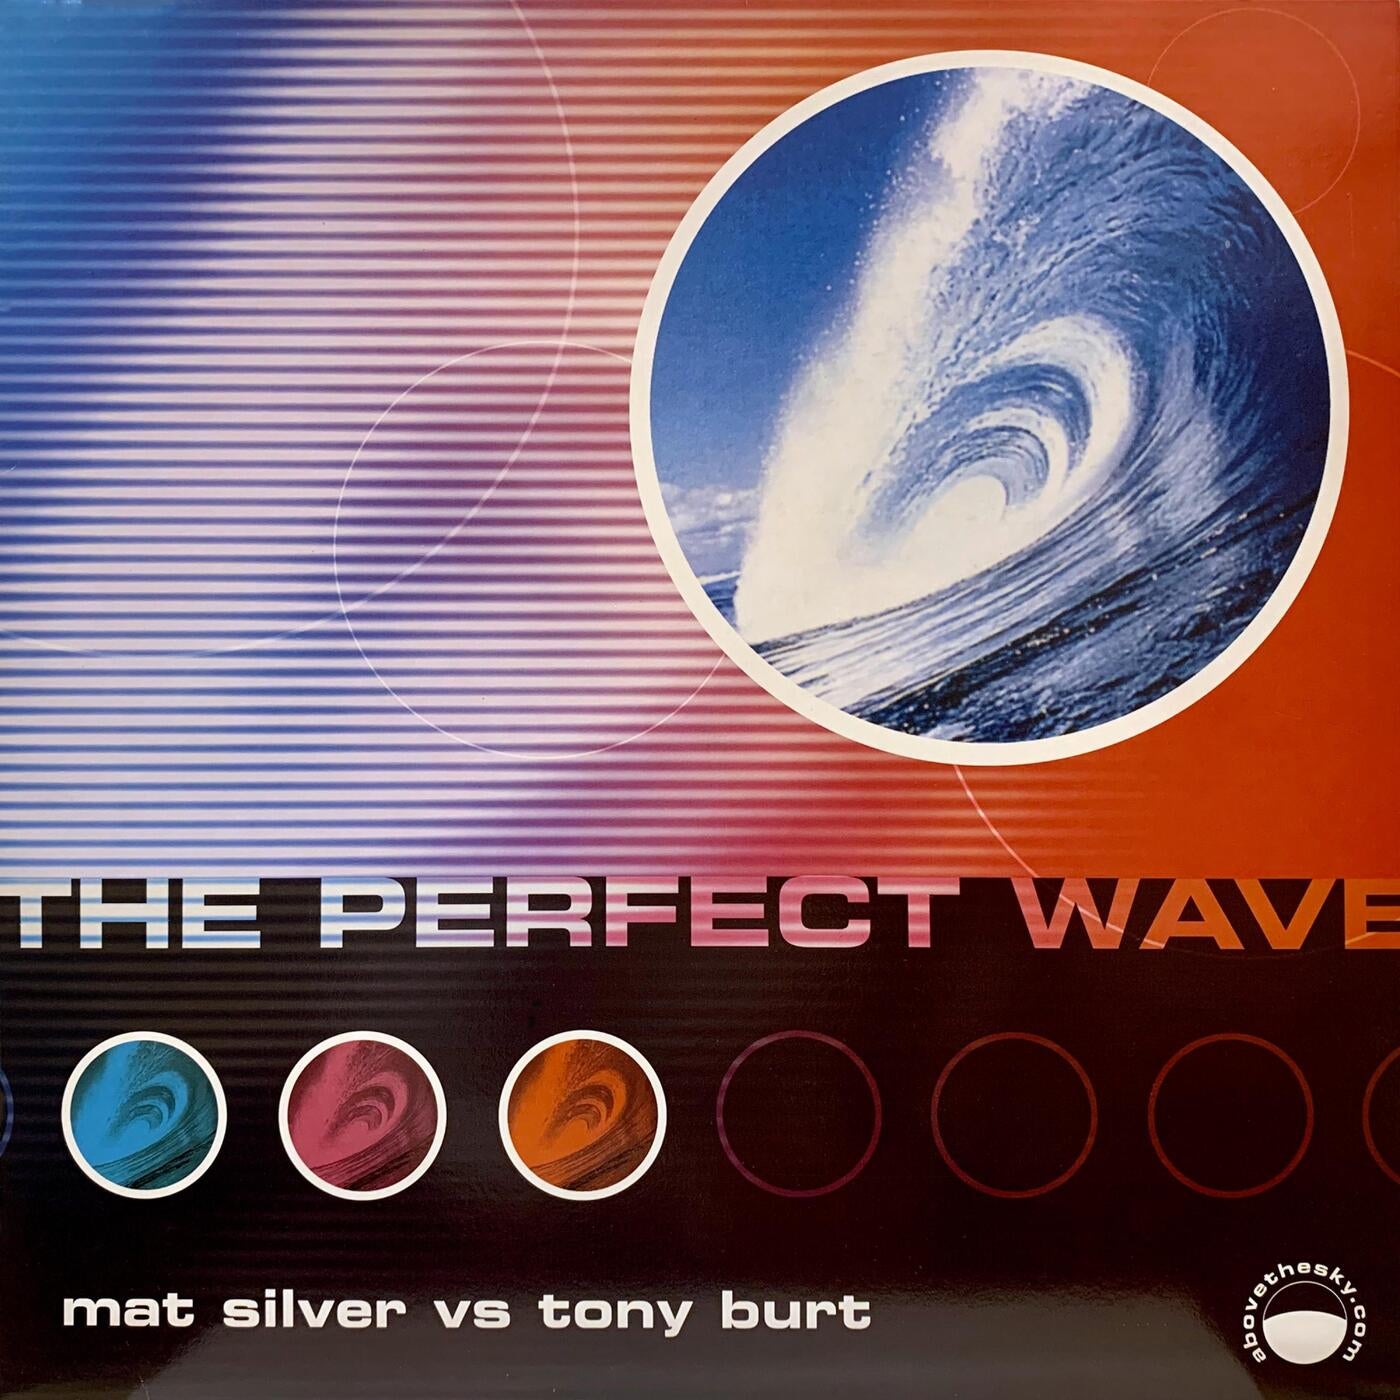 The Perfect Wave (Club Mix) (Club Mix) by Mat Silver vs. Tony Burt on  Beatport